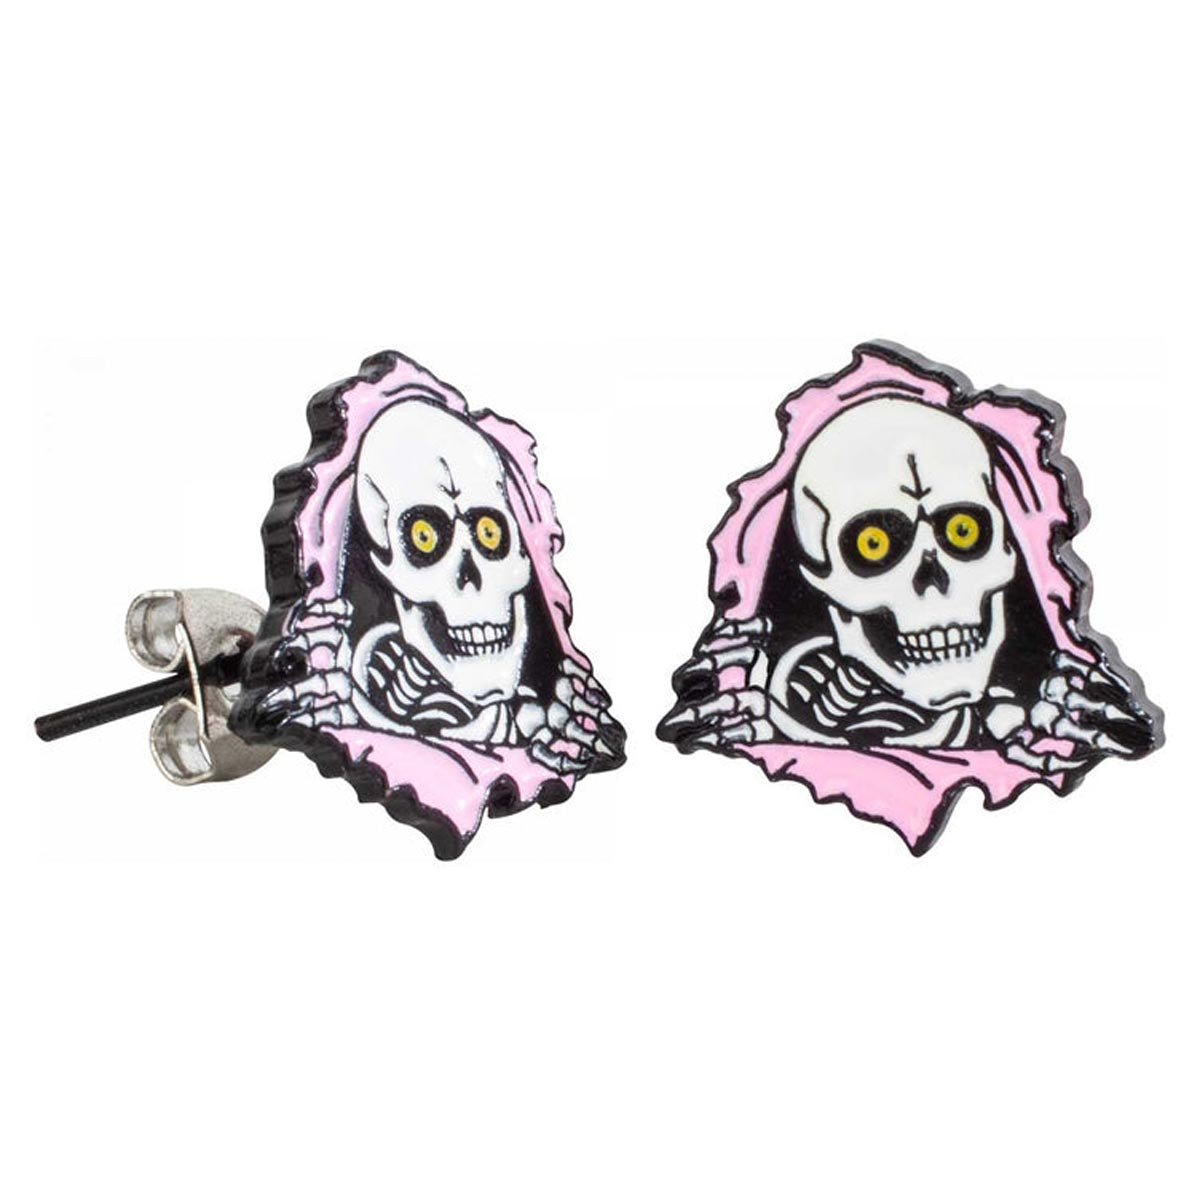 Powell Peralta Ripper Earrings - Pink image 2